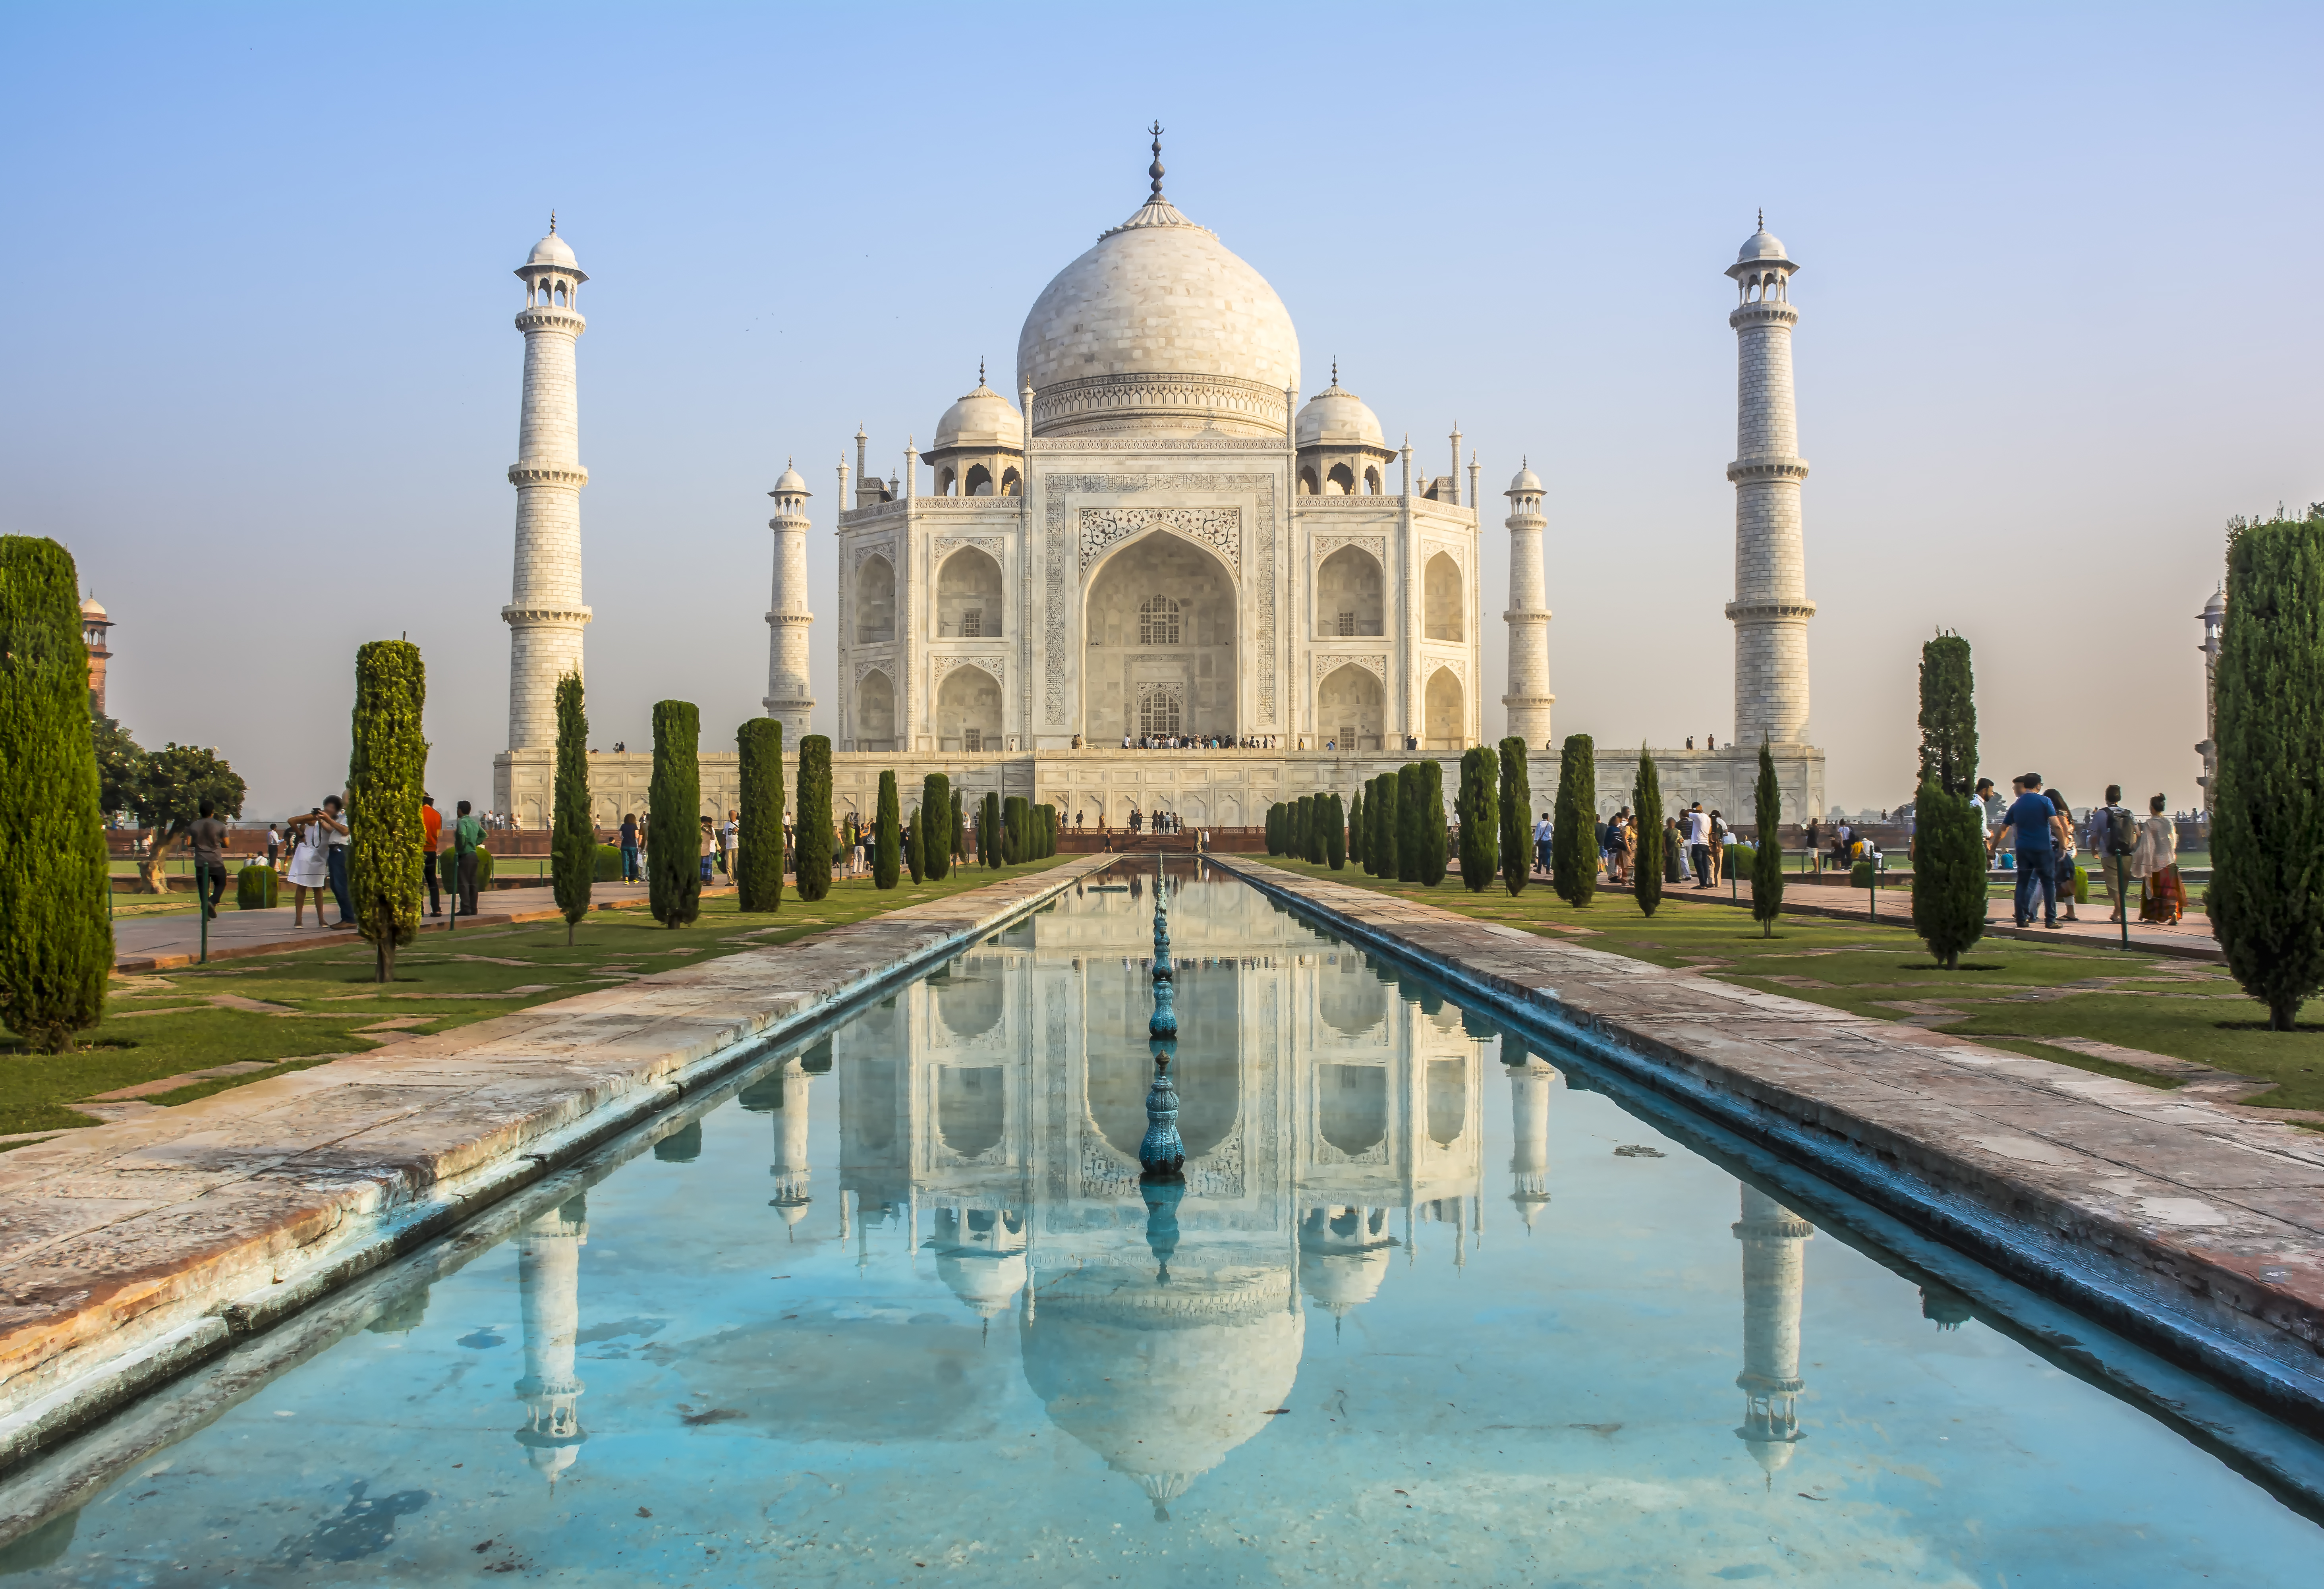 The Taj Mahal was seen as too sacred a venue for a Kanye show